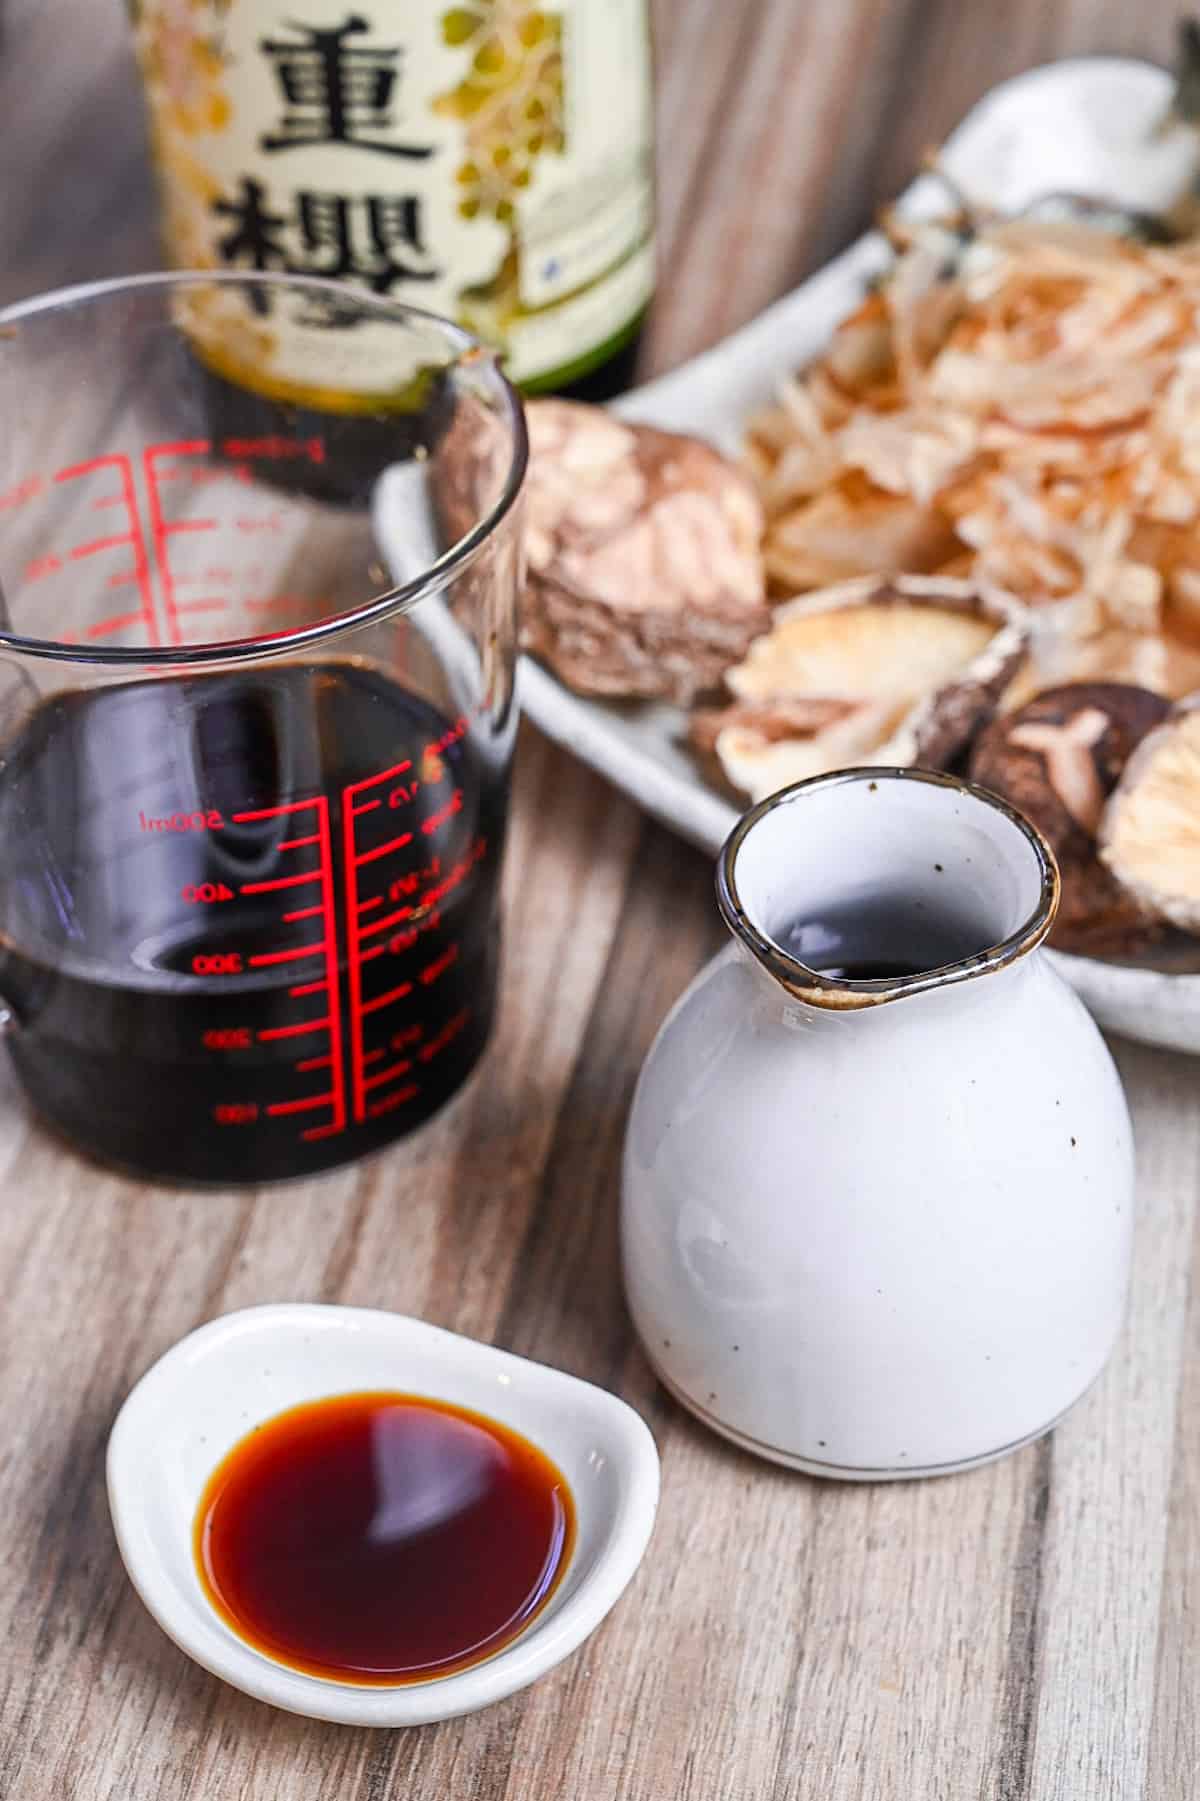 tsuyu sauce in white ceramic bottle and dipping dish next to a plate of shiitake, kombu and bonito flakes (dashi ingredients)